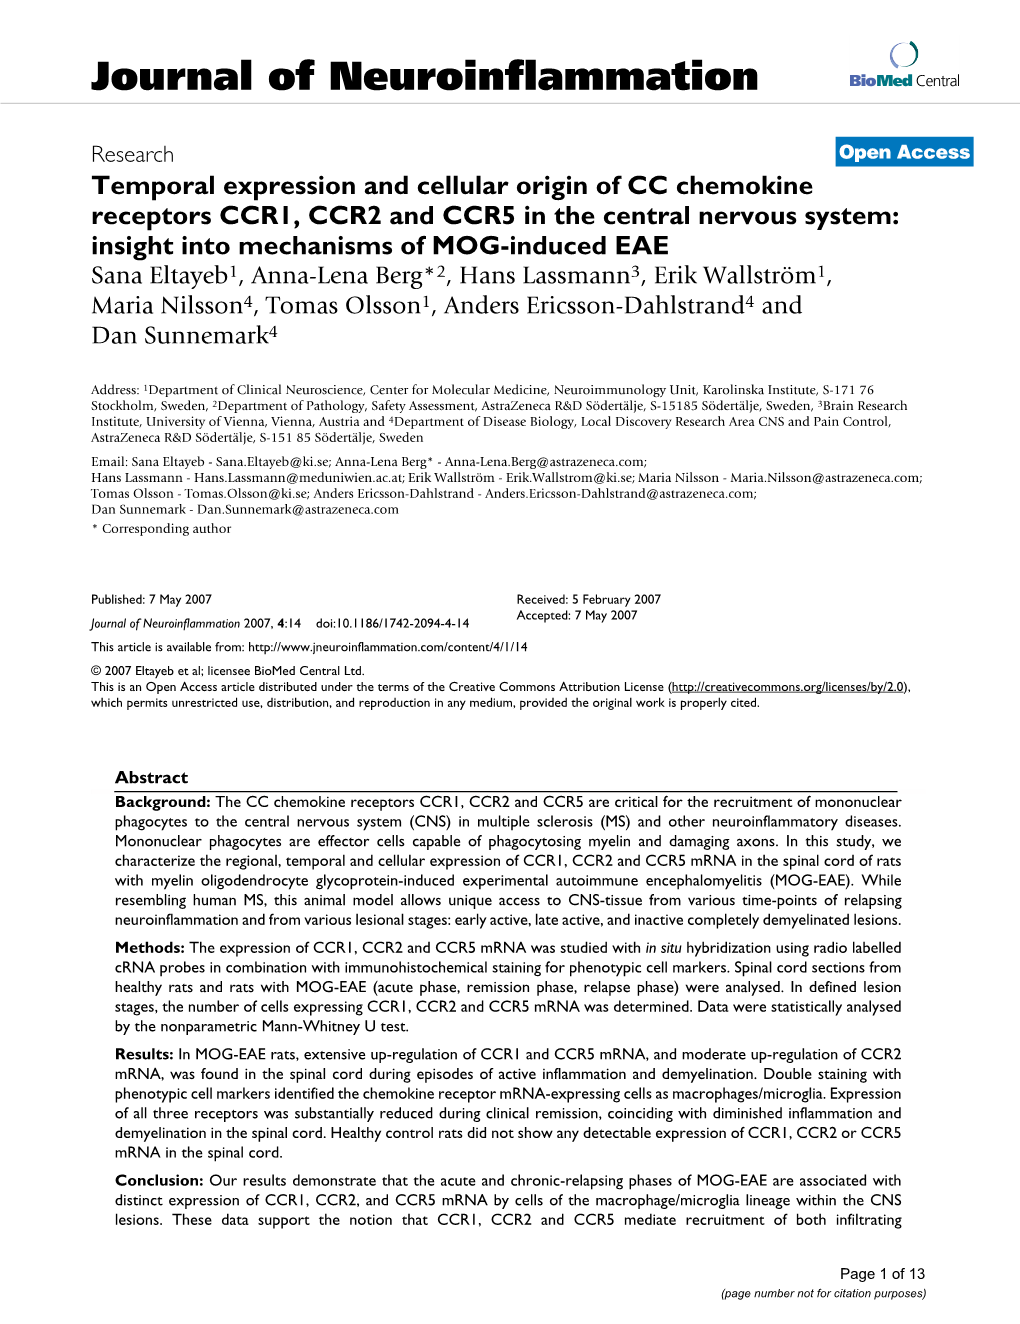 Temporal Expression and Cellular Origin of CC Chemokine Receptors